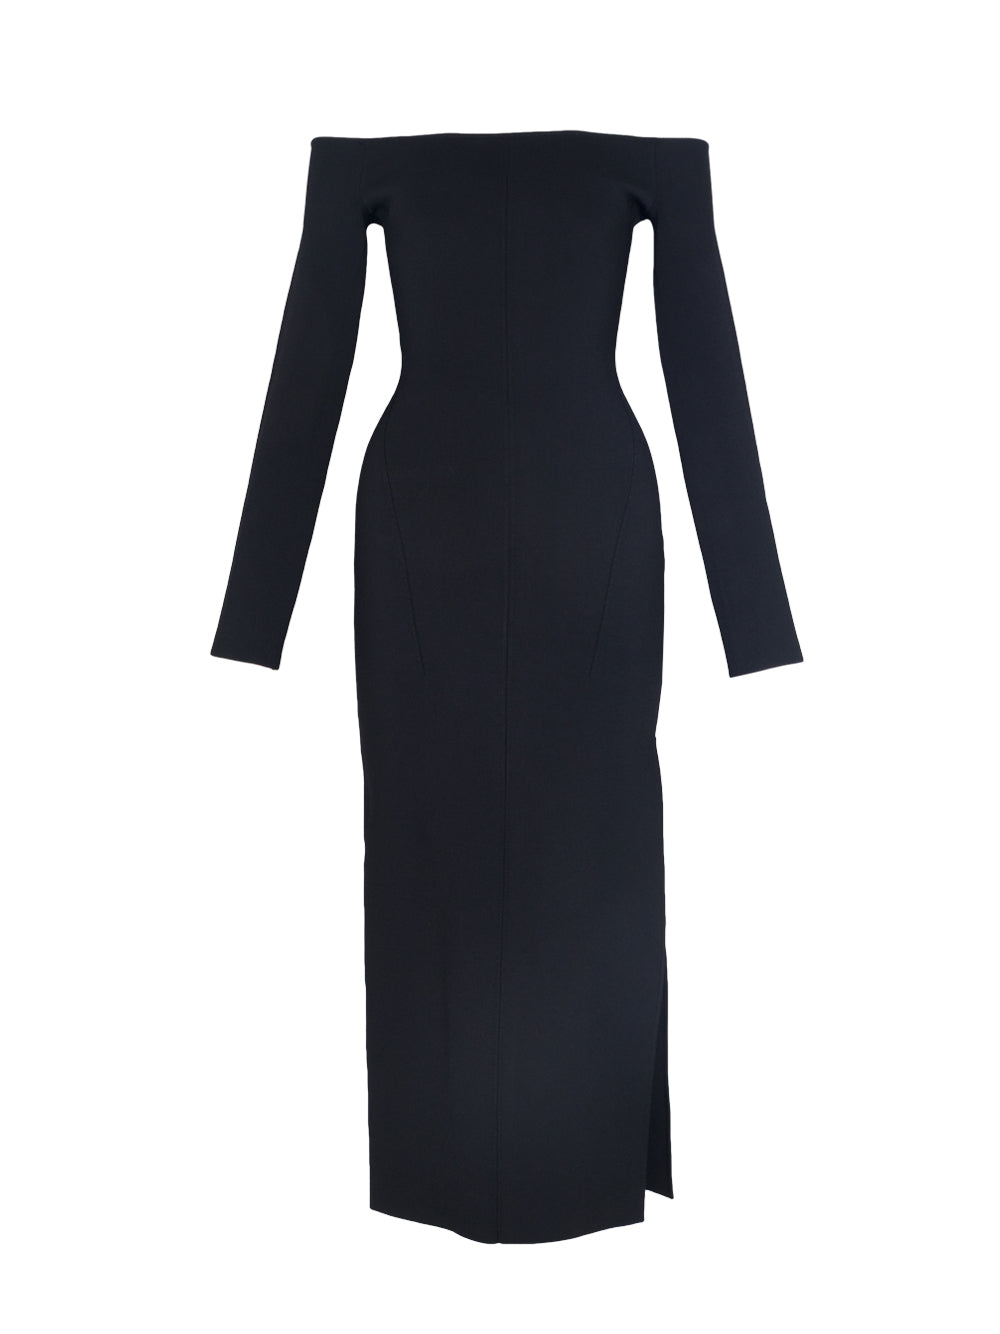 Long Sleeve Aphrodite Dress (Black)